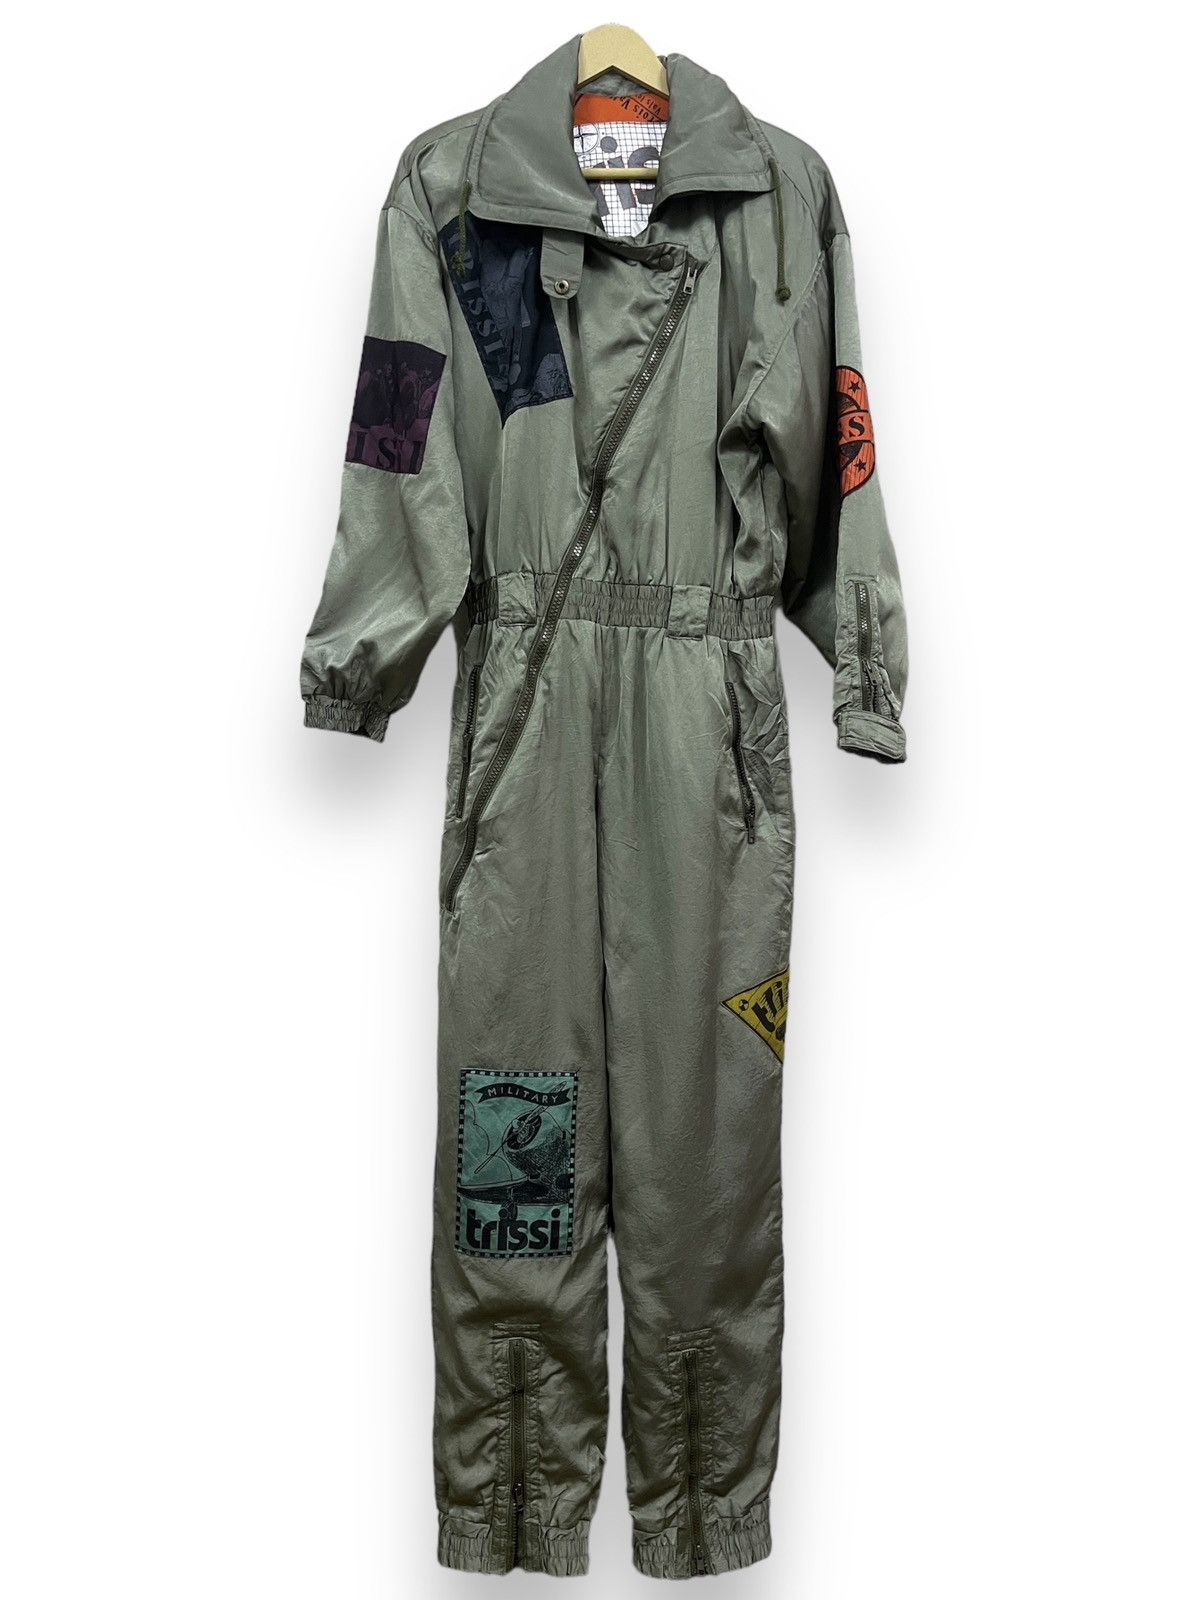 Vintage - Japan Trissi Specialist Parachute Jumpsuit Overall Jacket - 5